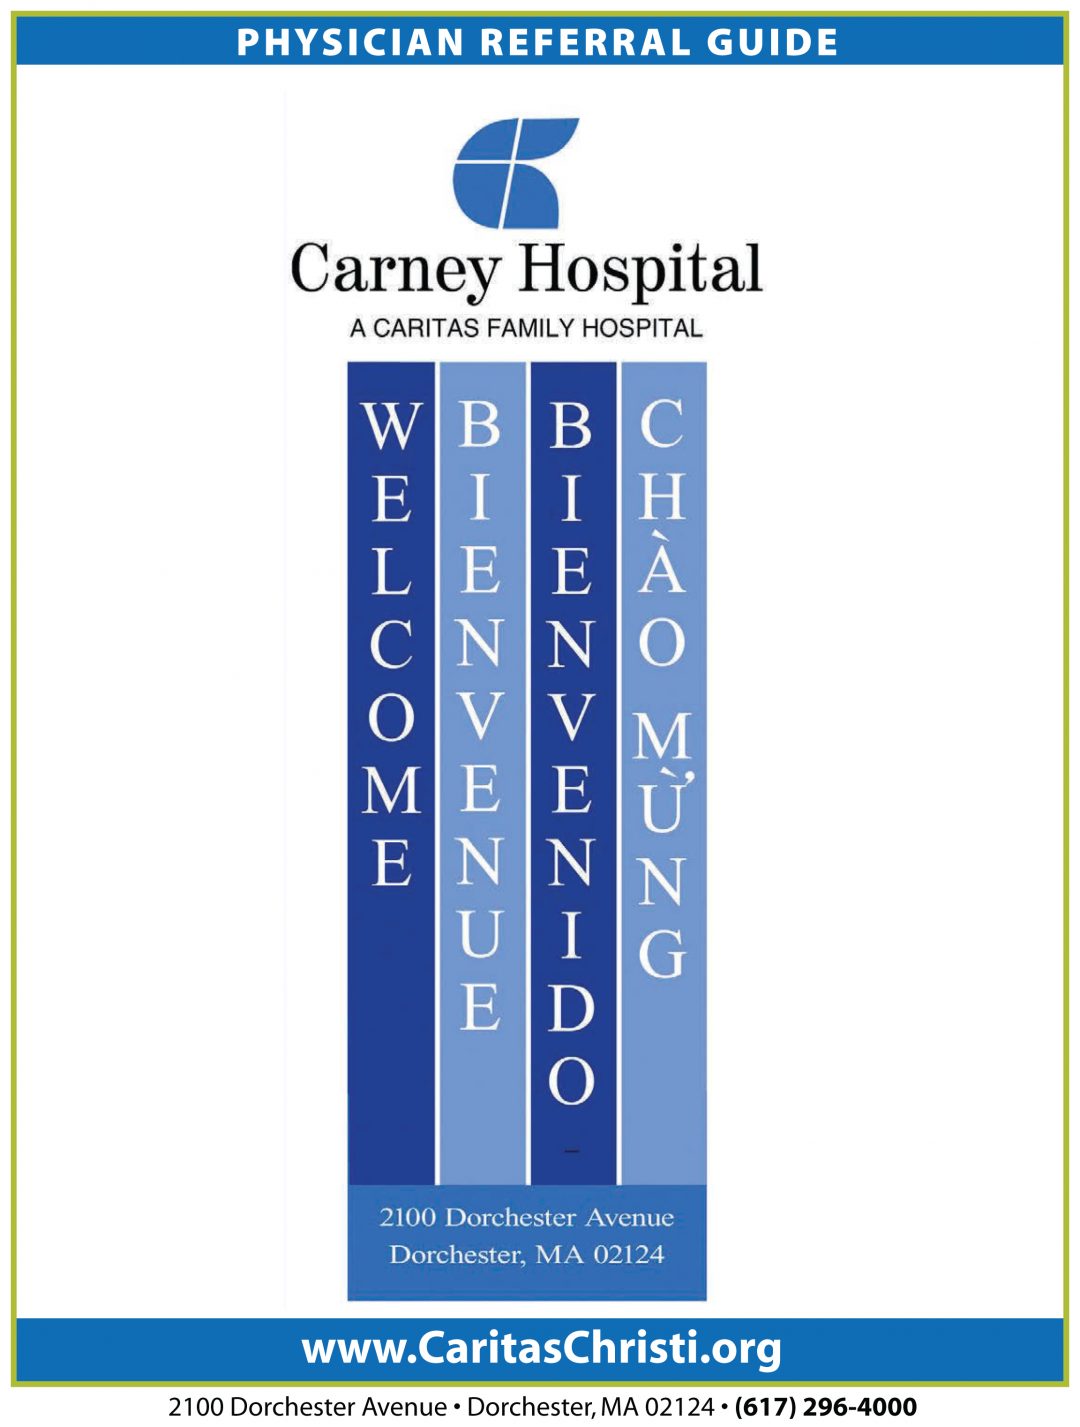 Carney Hospital